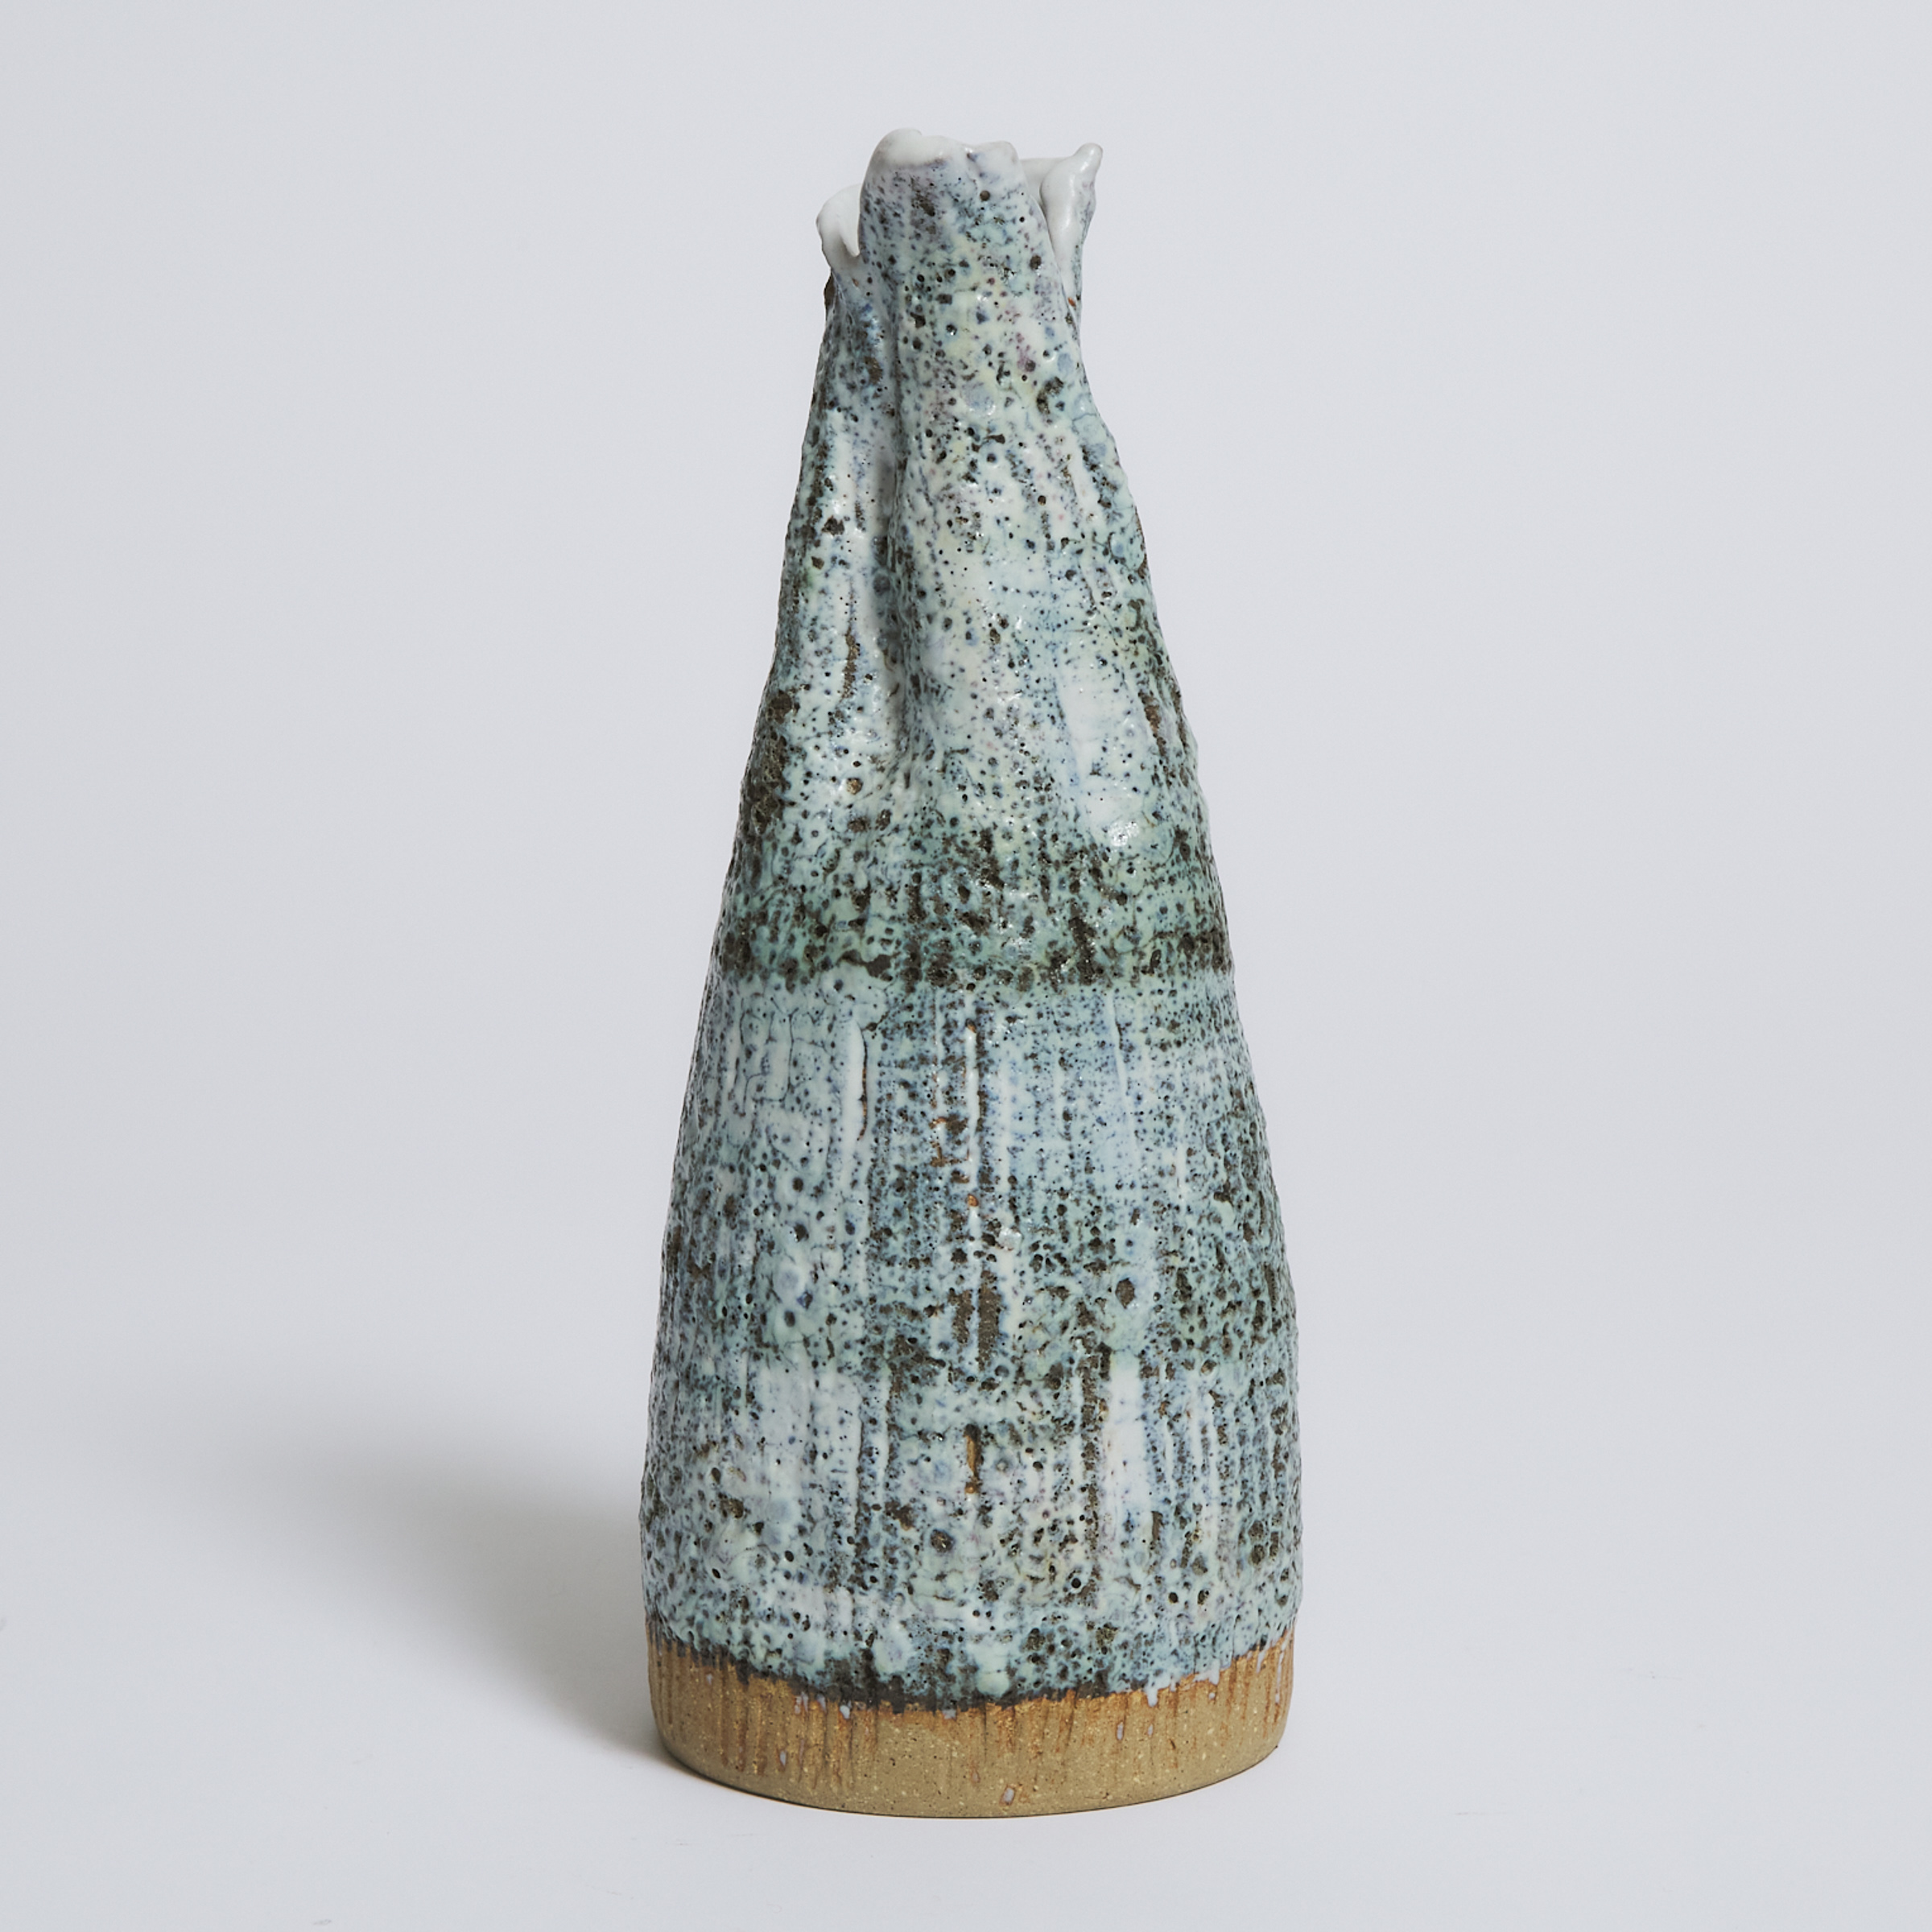 Tessa Kidick (Canadian, 1915-2002), Stoneware Vase, 1974